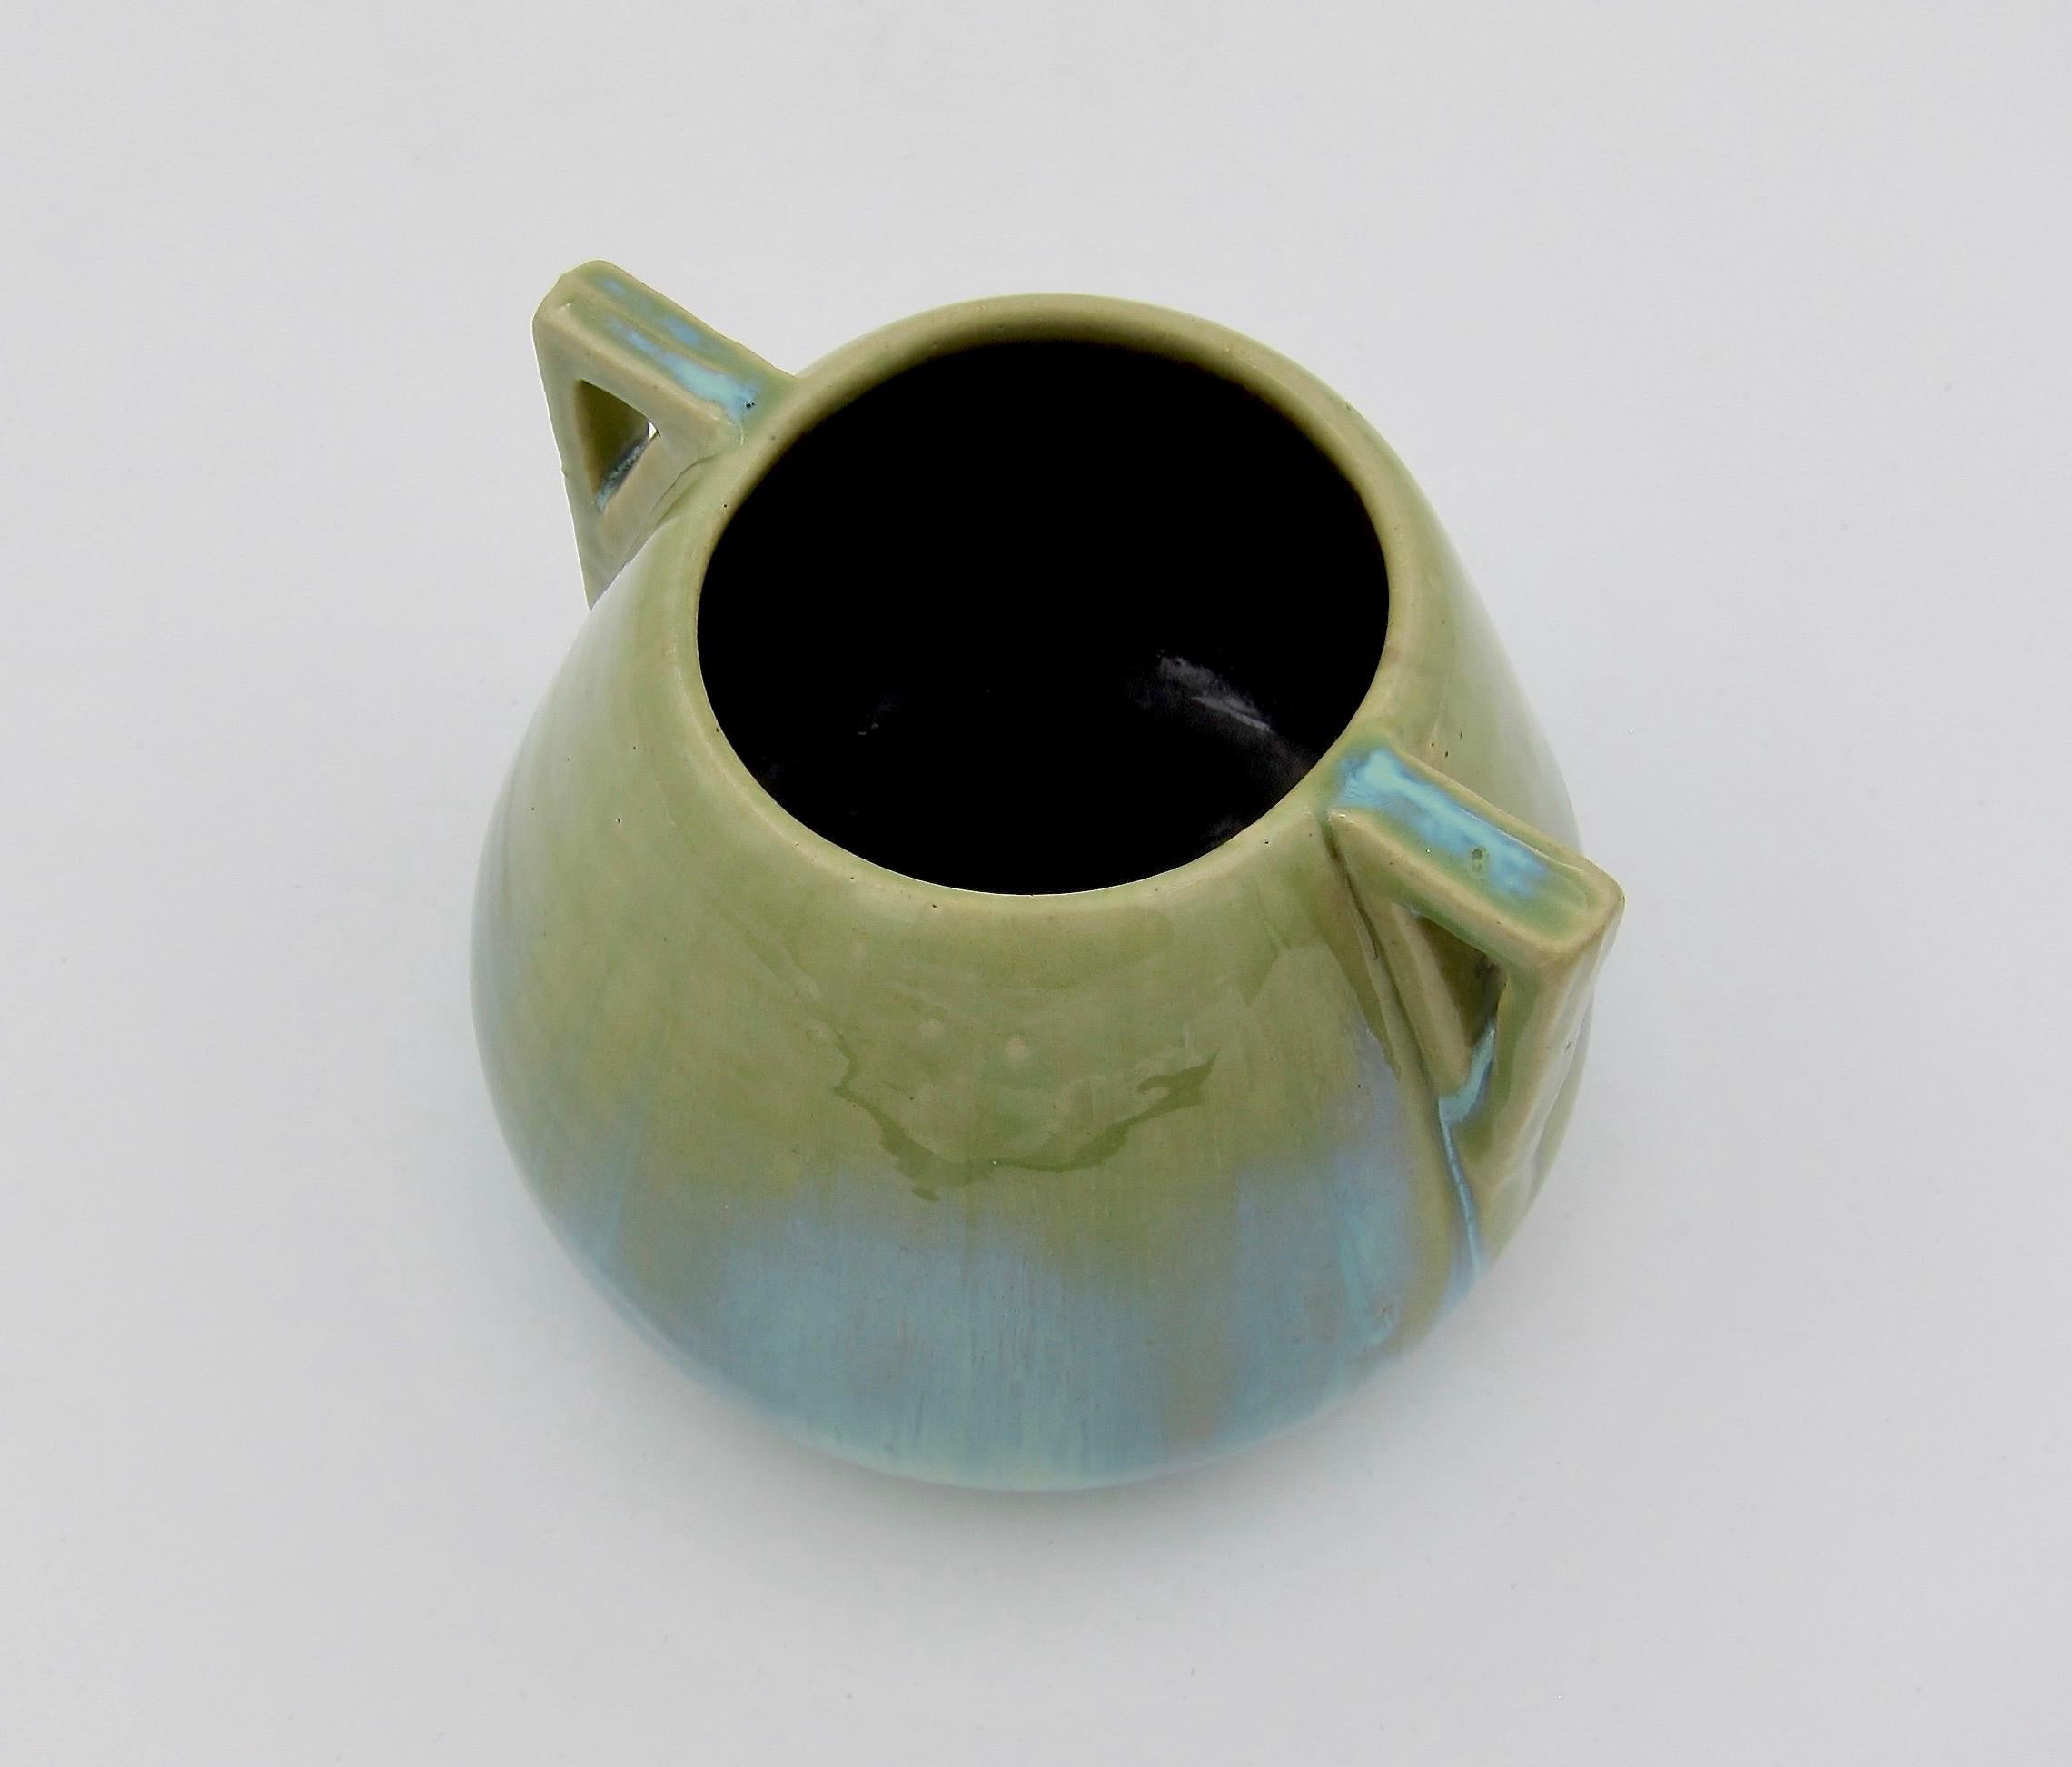 20th Century Vintage Fulper Pottery Double Handled Vase with a Green Flambé Glaze